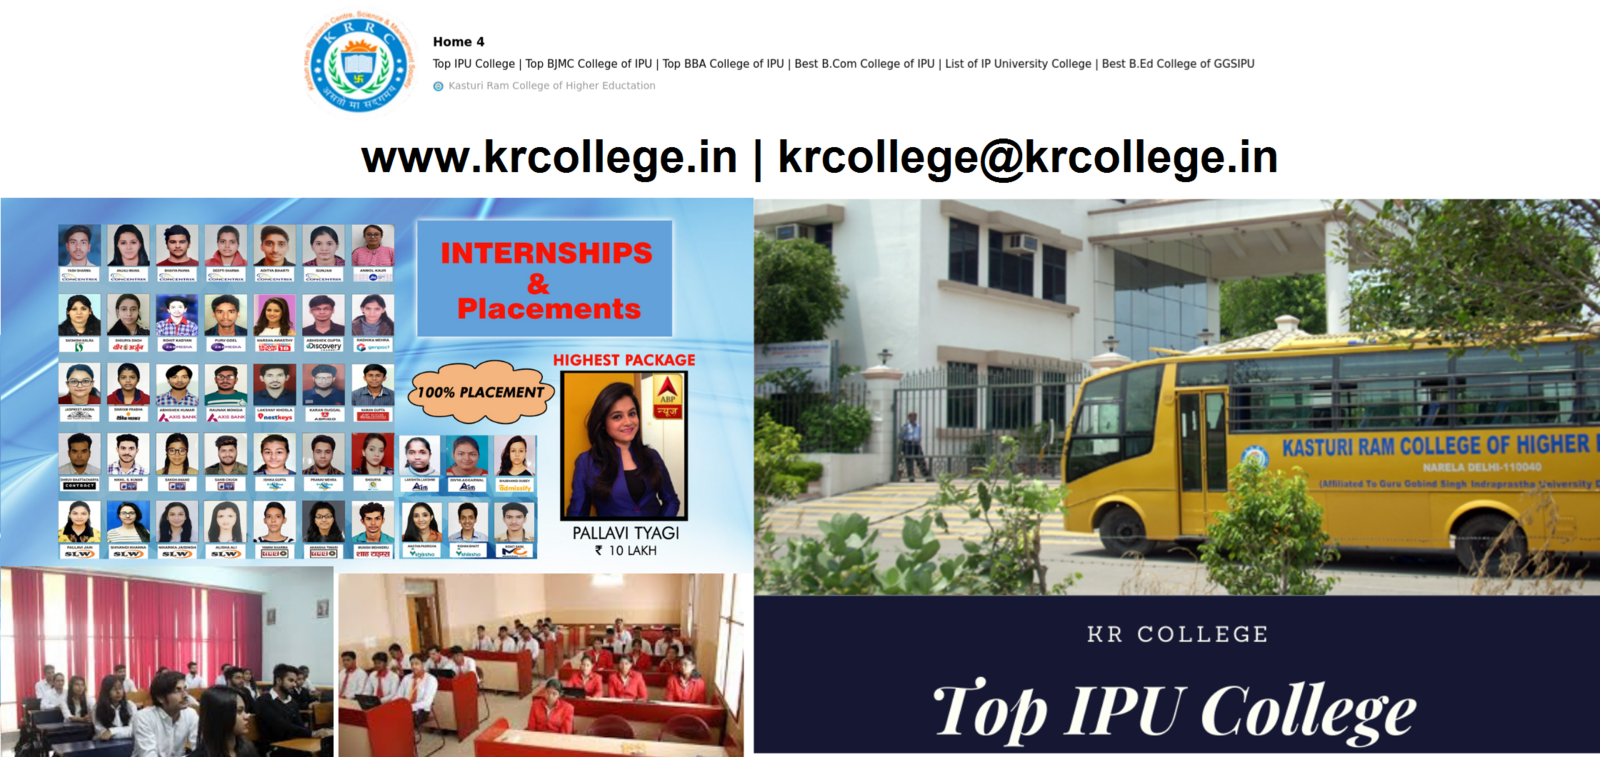 Top 10 Ip University Colleges Delhi Ncr Top Ipu College Top Bjmc College Of Ggsipu Top 10 Ip University Colleges